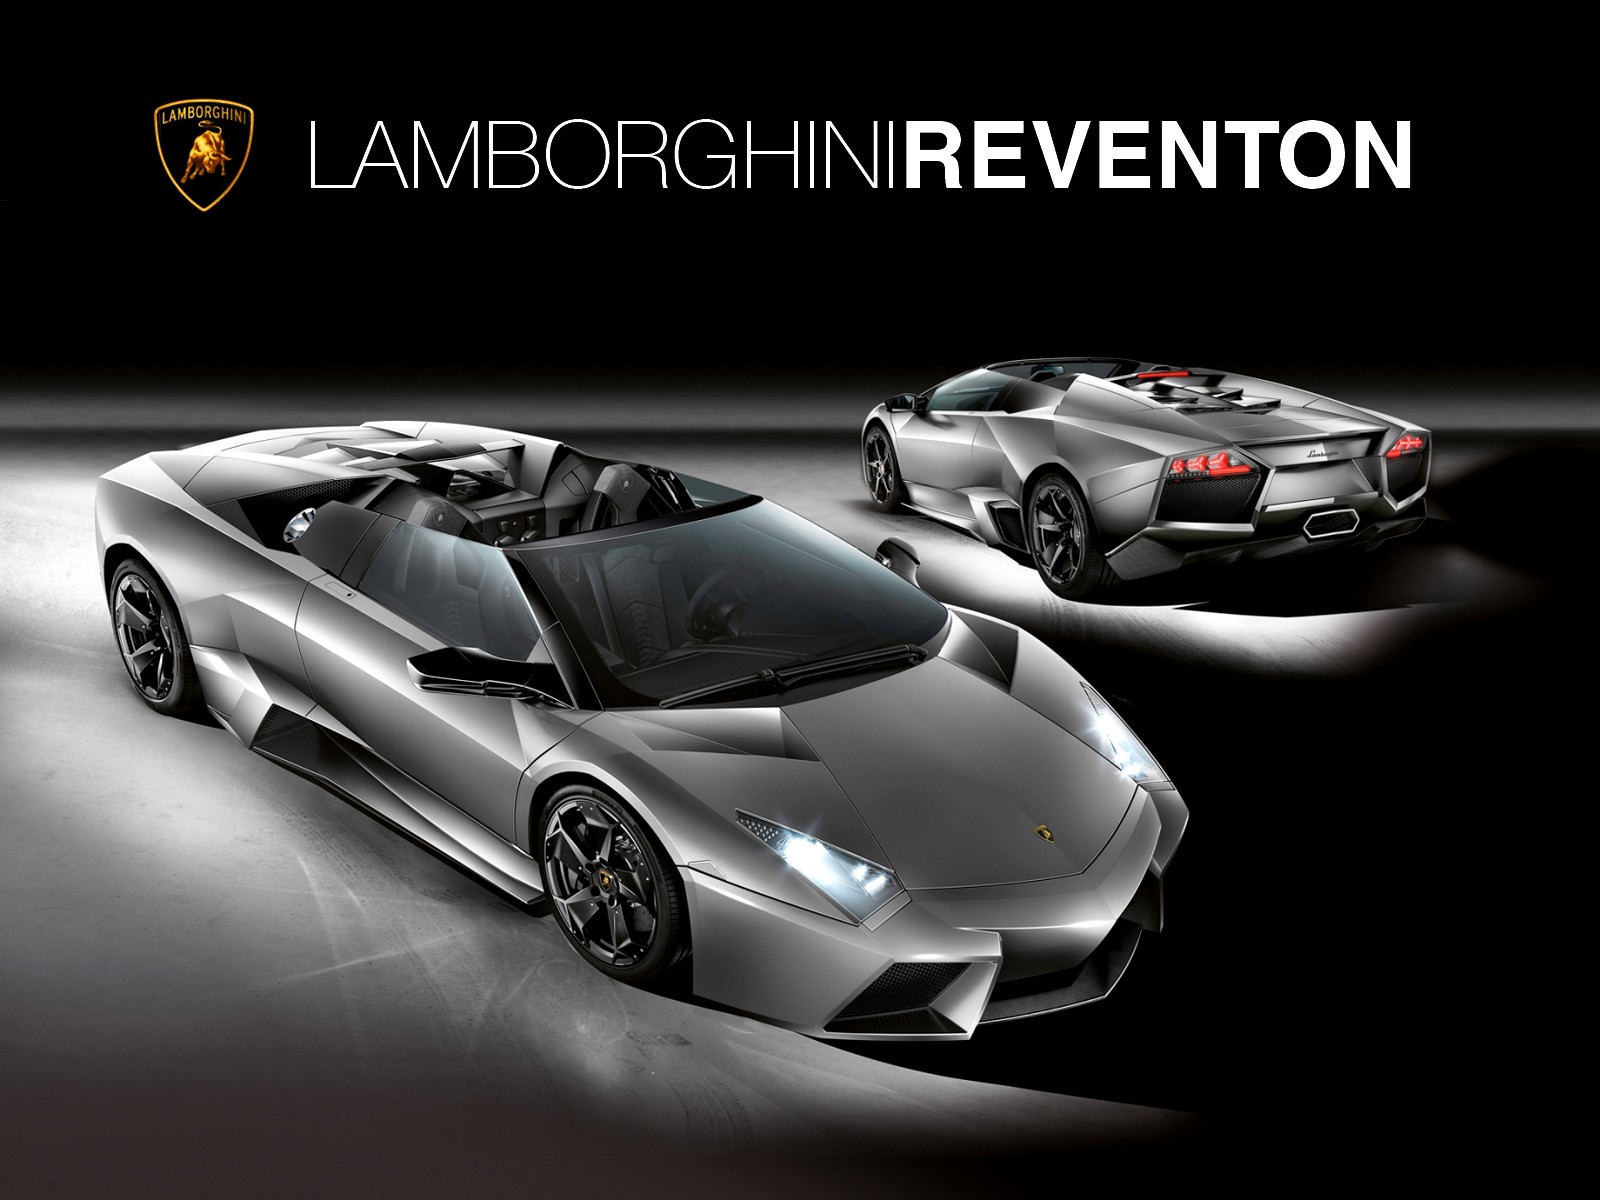 Lamborghini Reventon Wallpaper Full HD 5houyt5